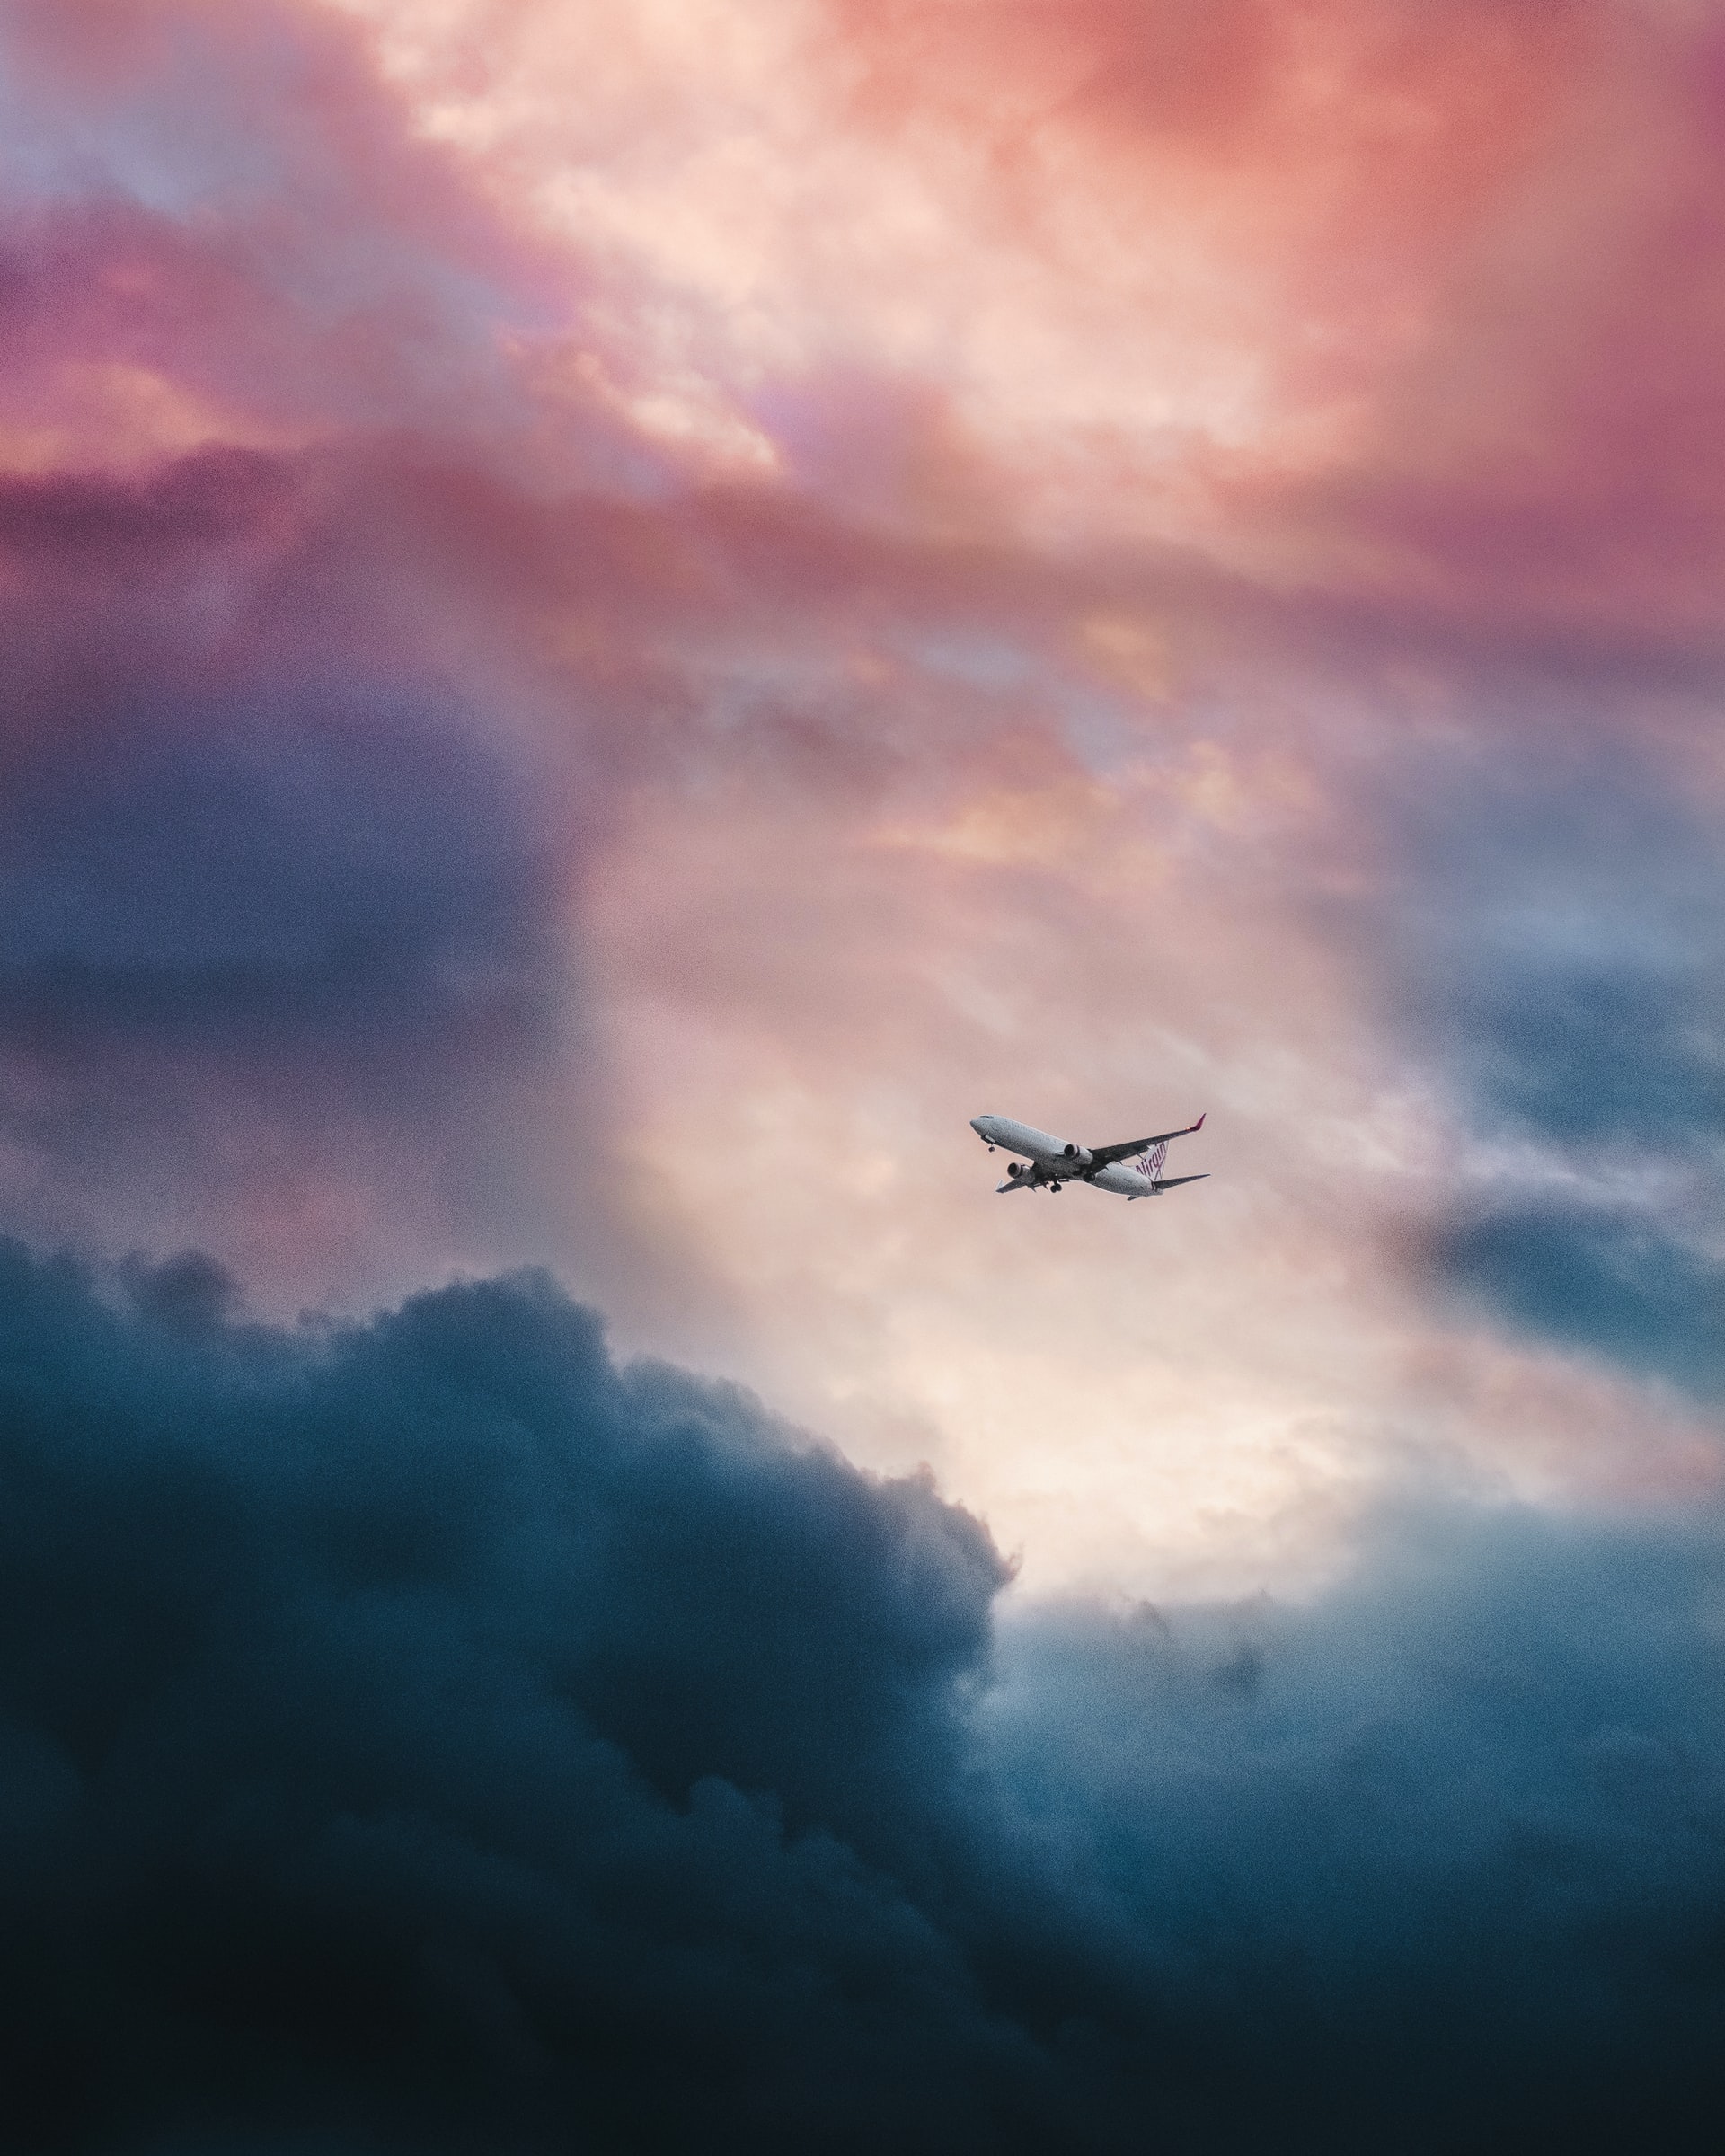 Plane Crash Legal Help - Let Us Help You - The Flight Attorneys